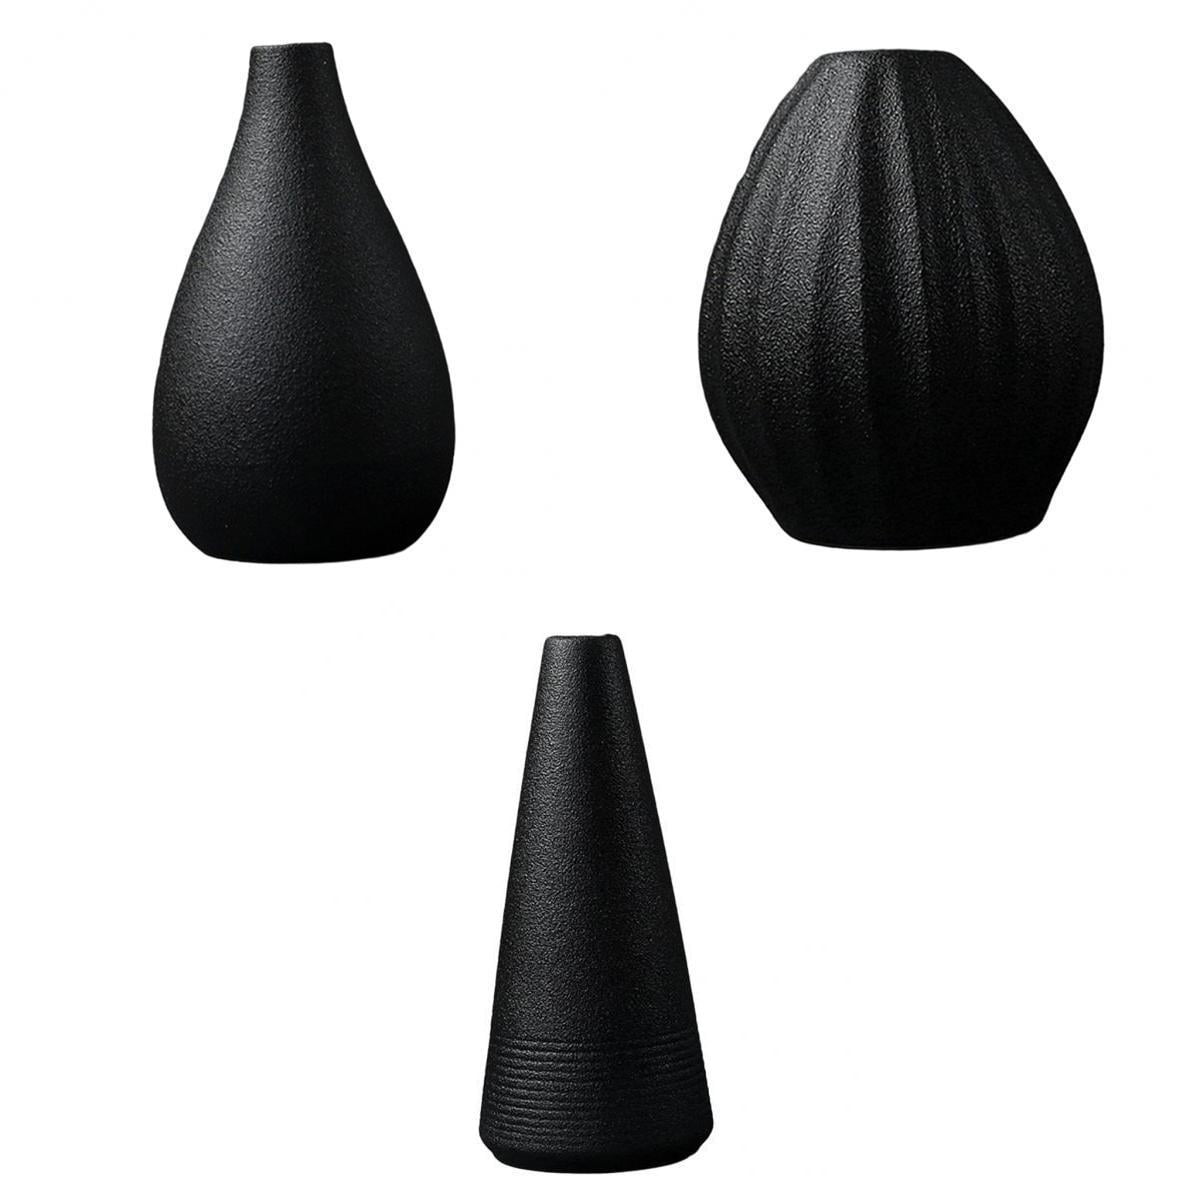 Details about   Modern Black Ceramic Flower Vase Planter Pot Centerpieces Kitchen Decoration 